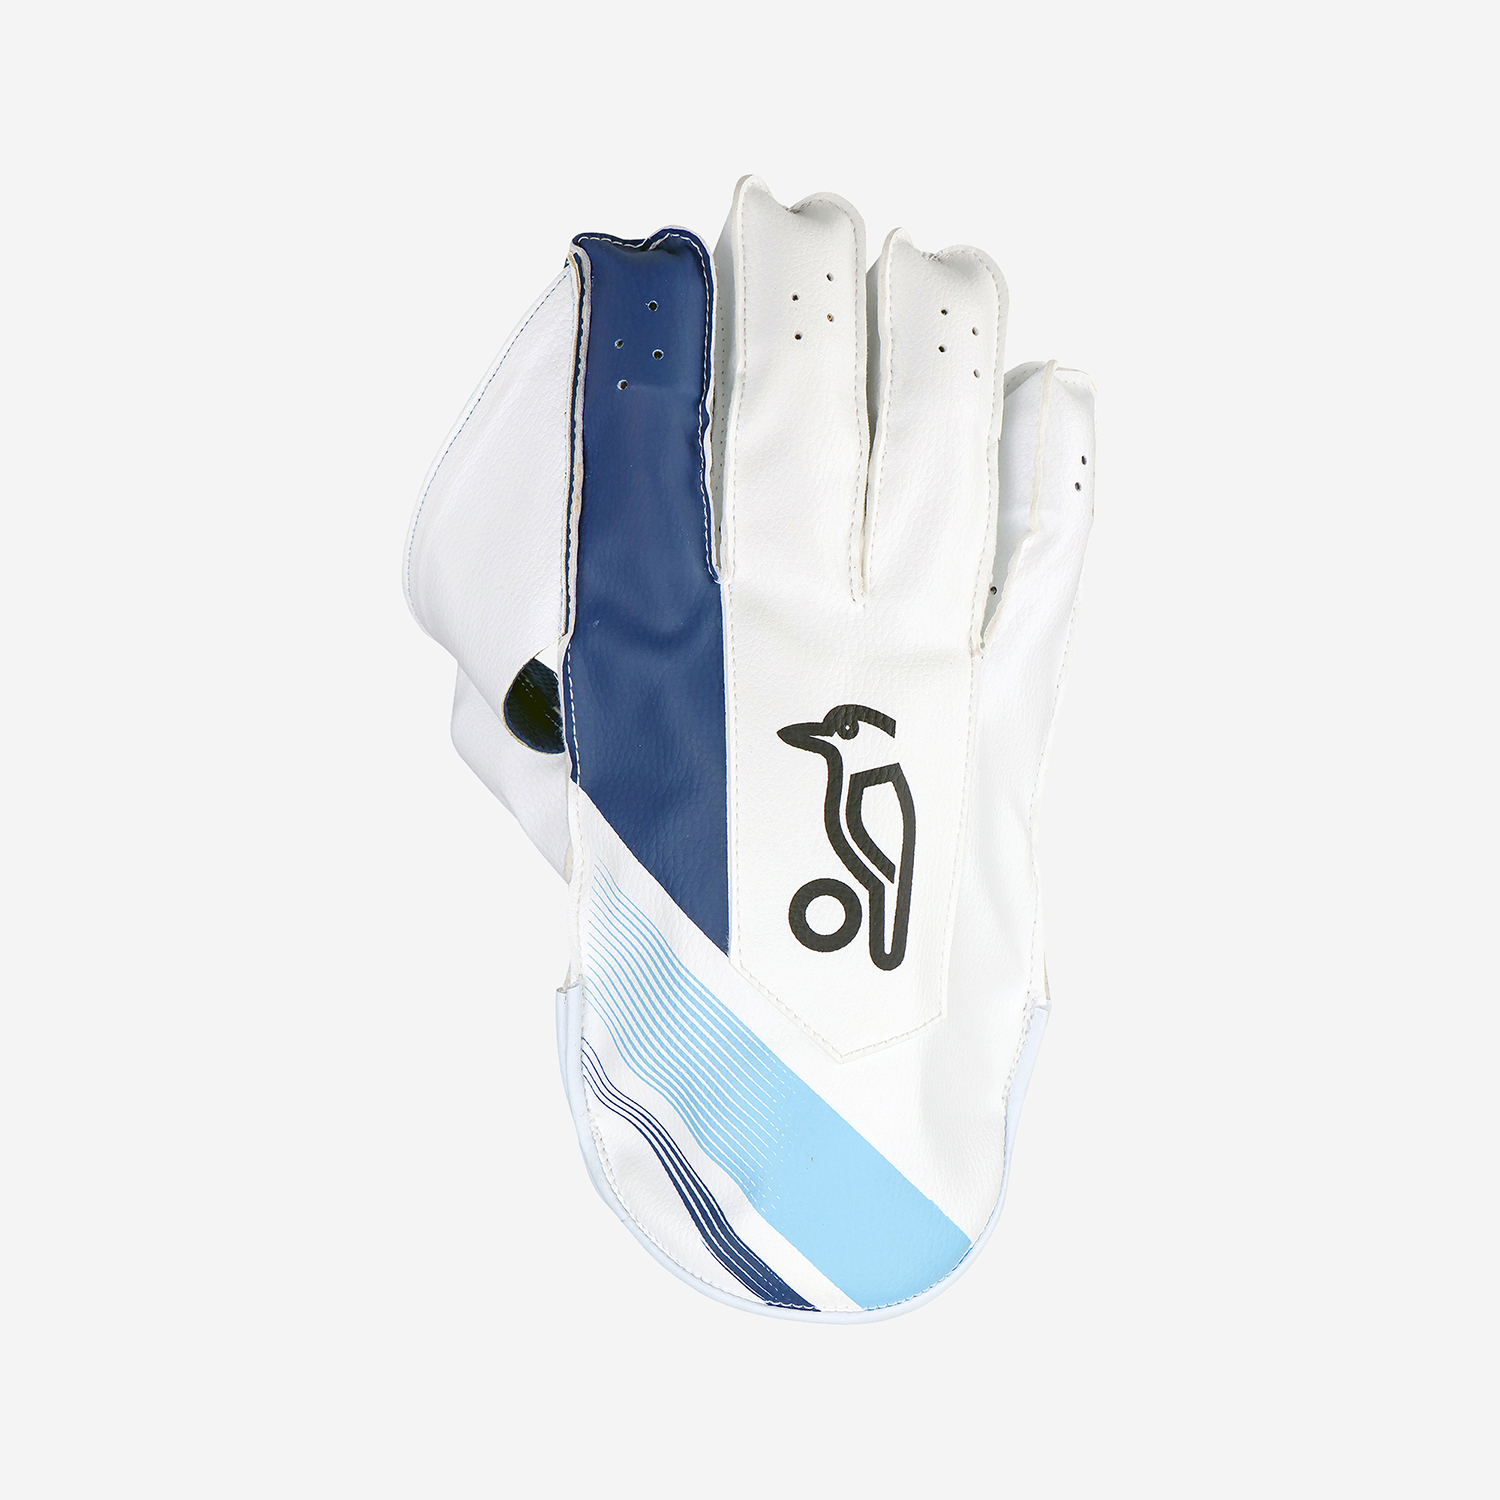 Pro 3.0 Wicket Keeping Gloves